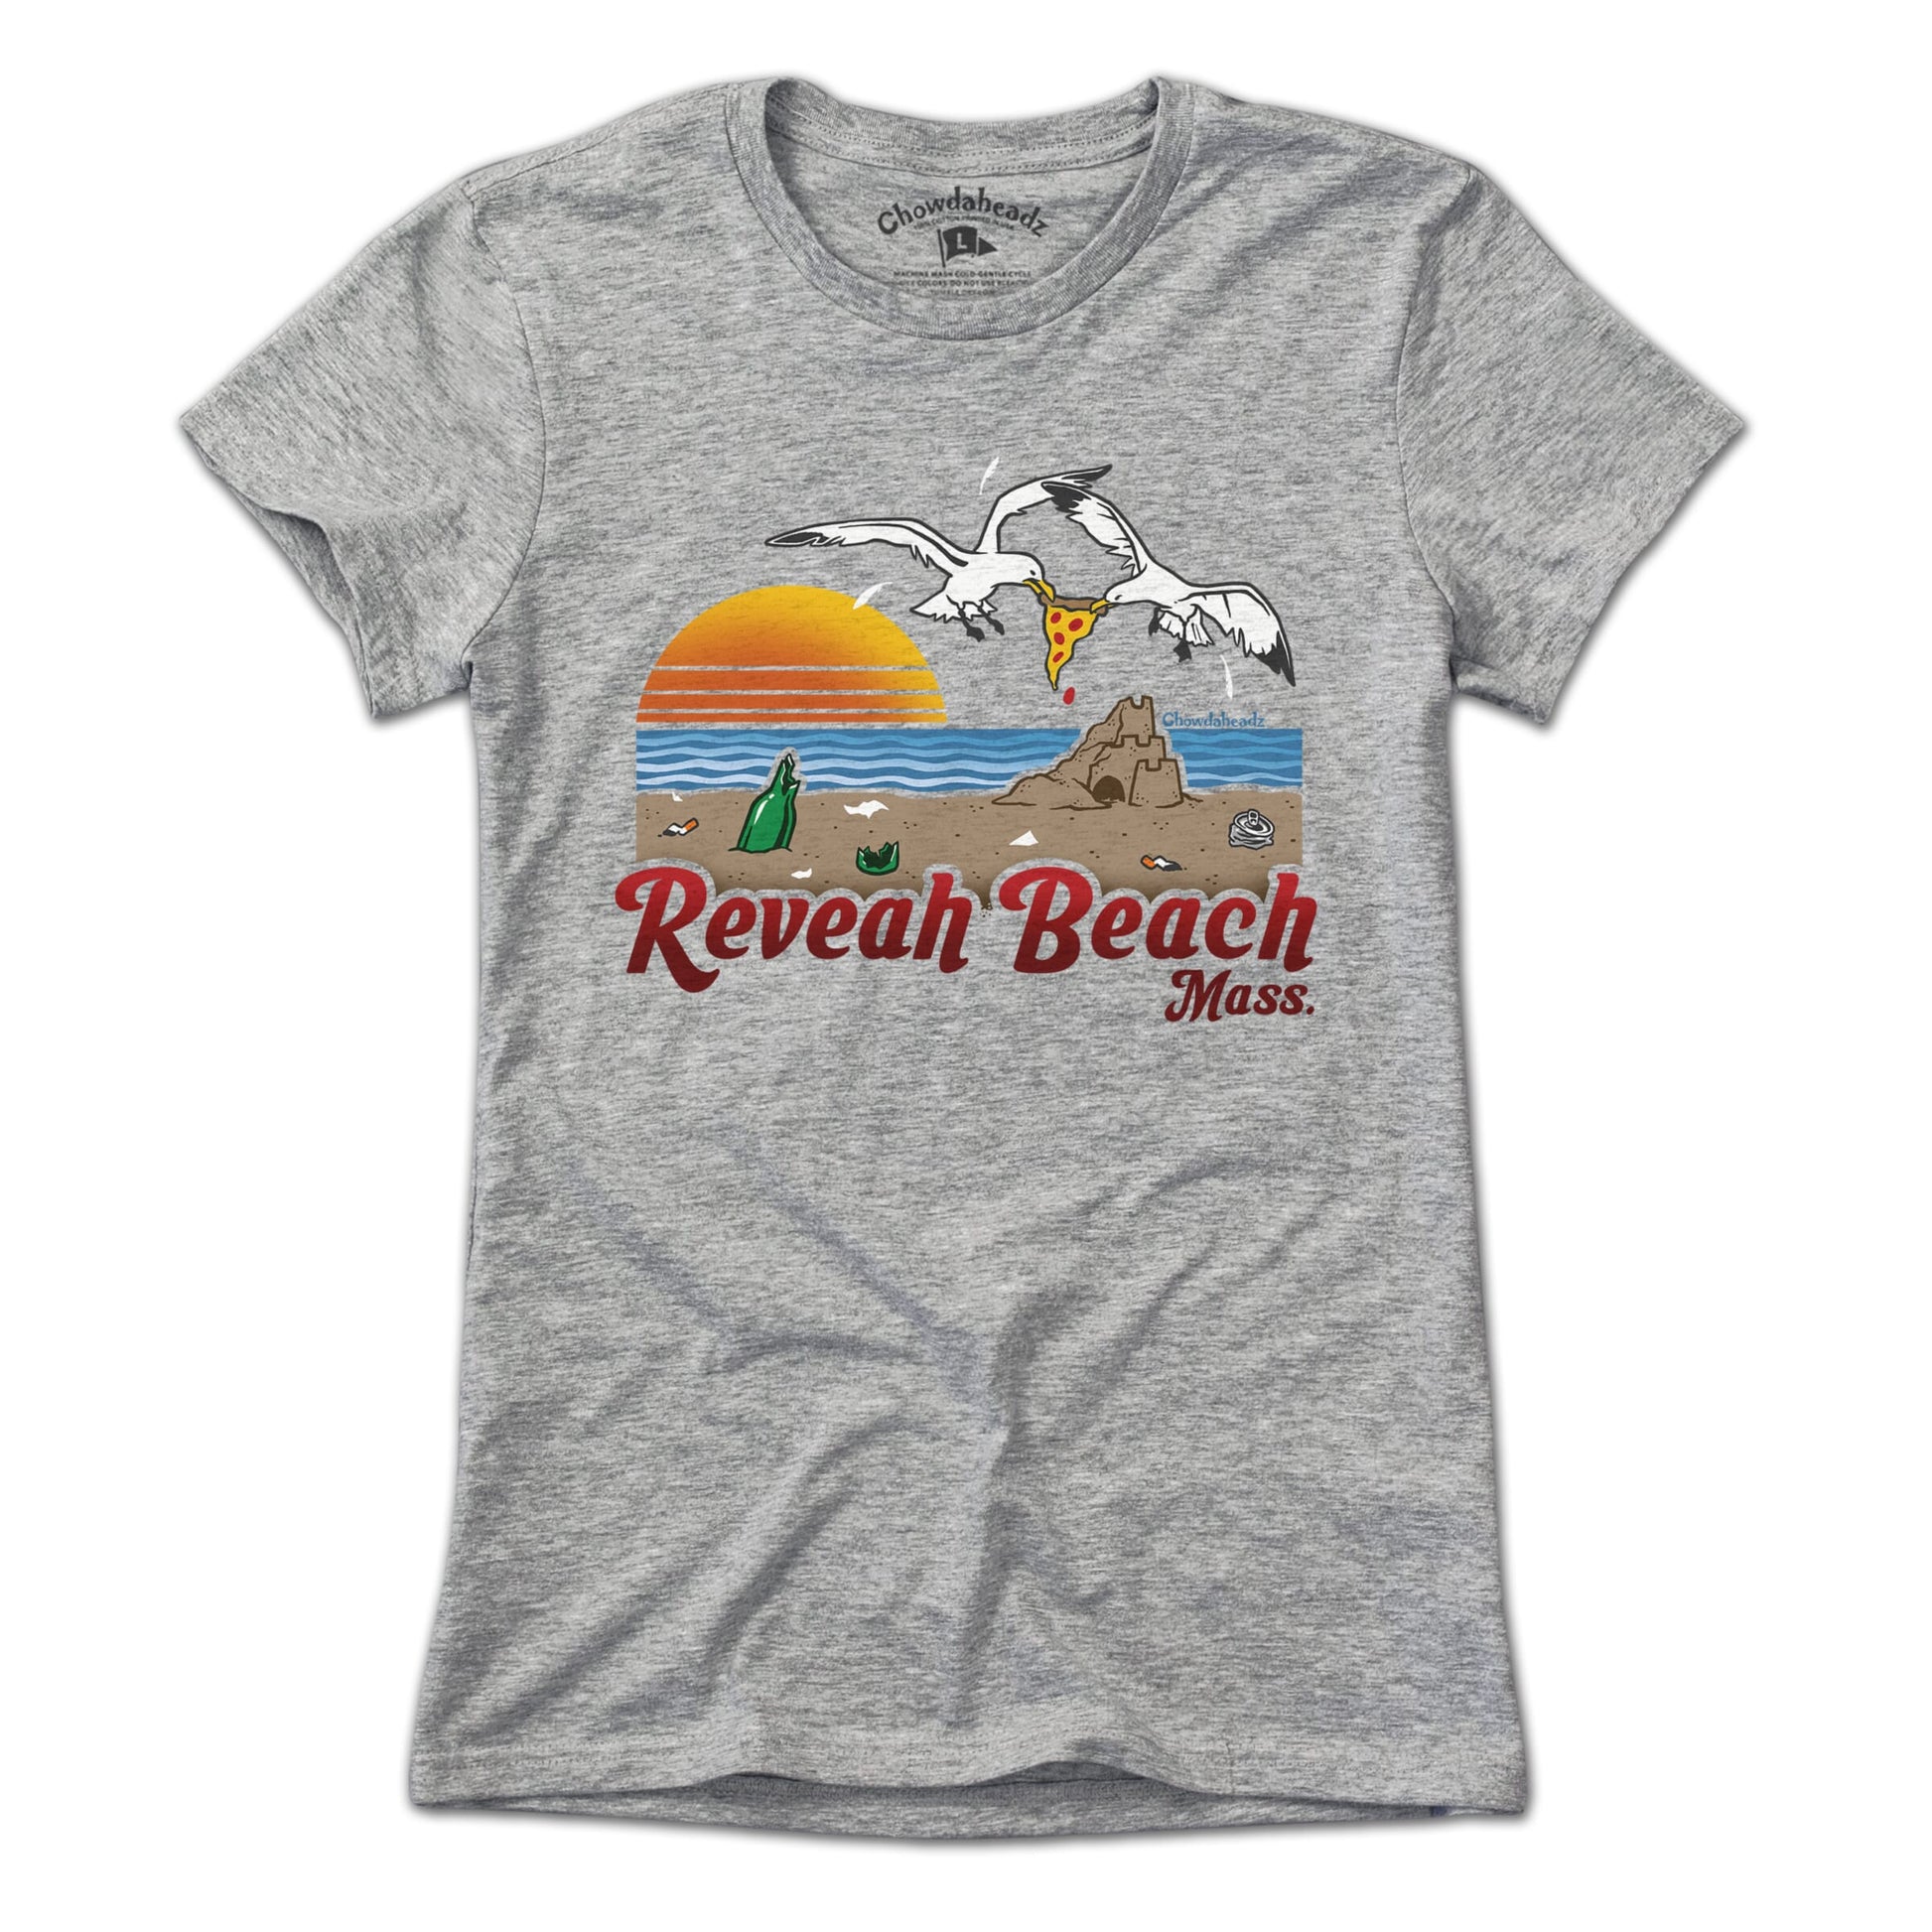 Reveah Beach T-Shirt - Chowdaheadz